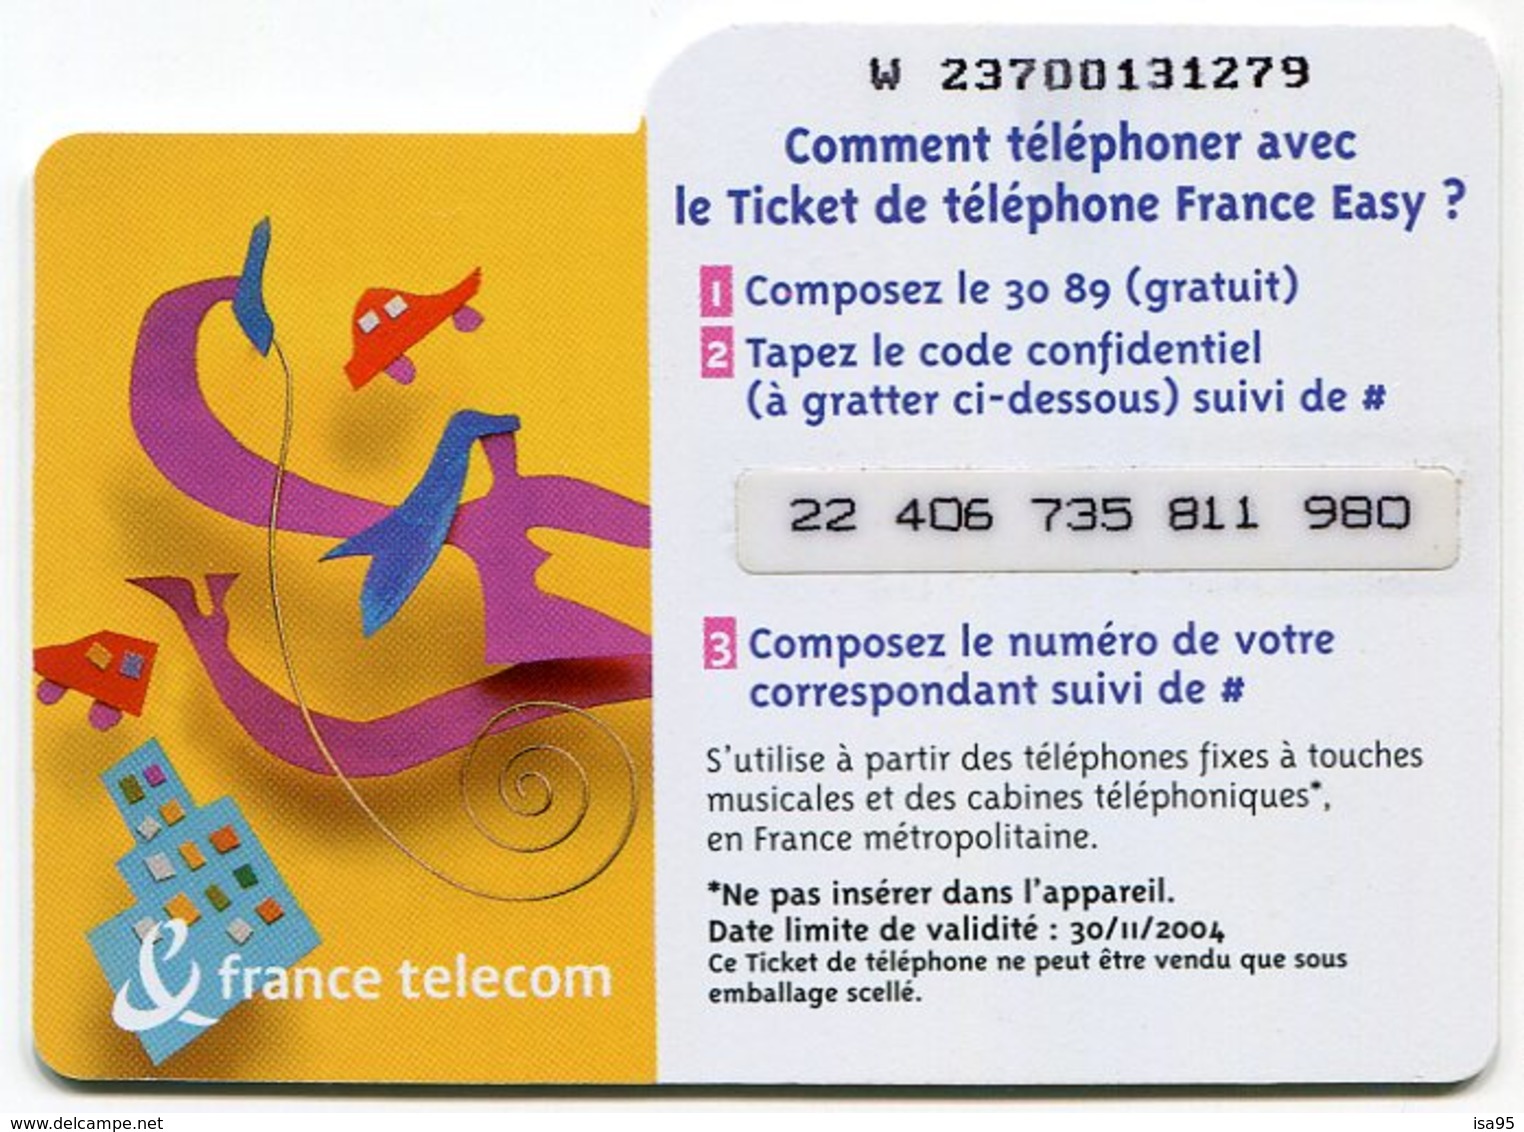 TELECARTE-LE TICKET DE TELEPHONE FRANCE EASY-2004-7.5€ - FT Tickets